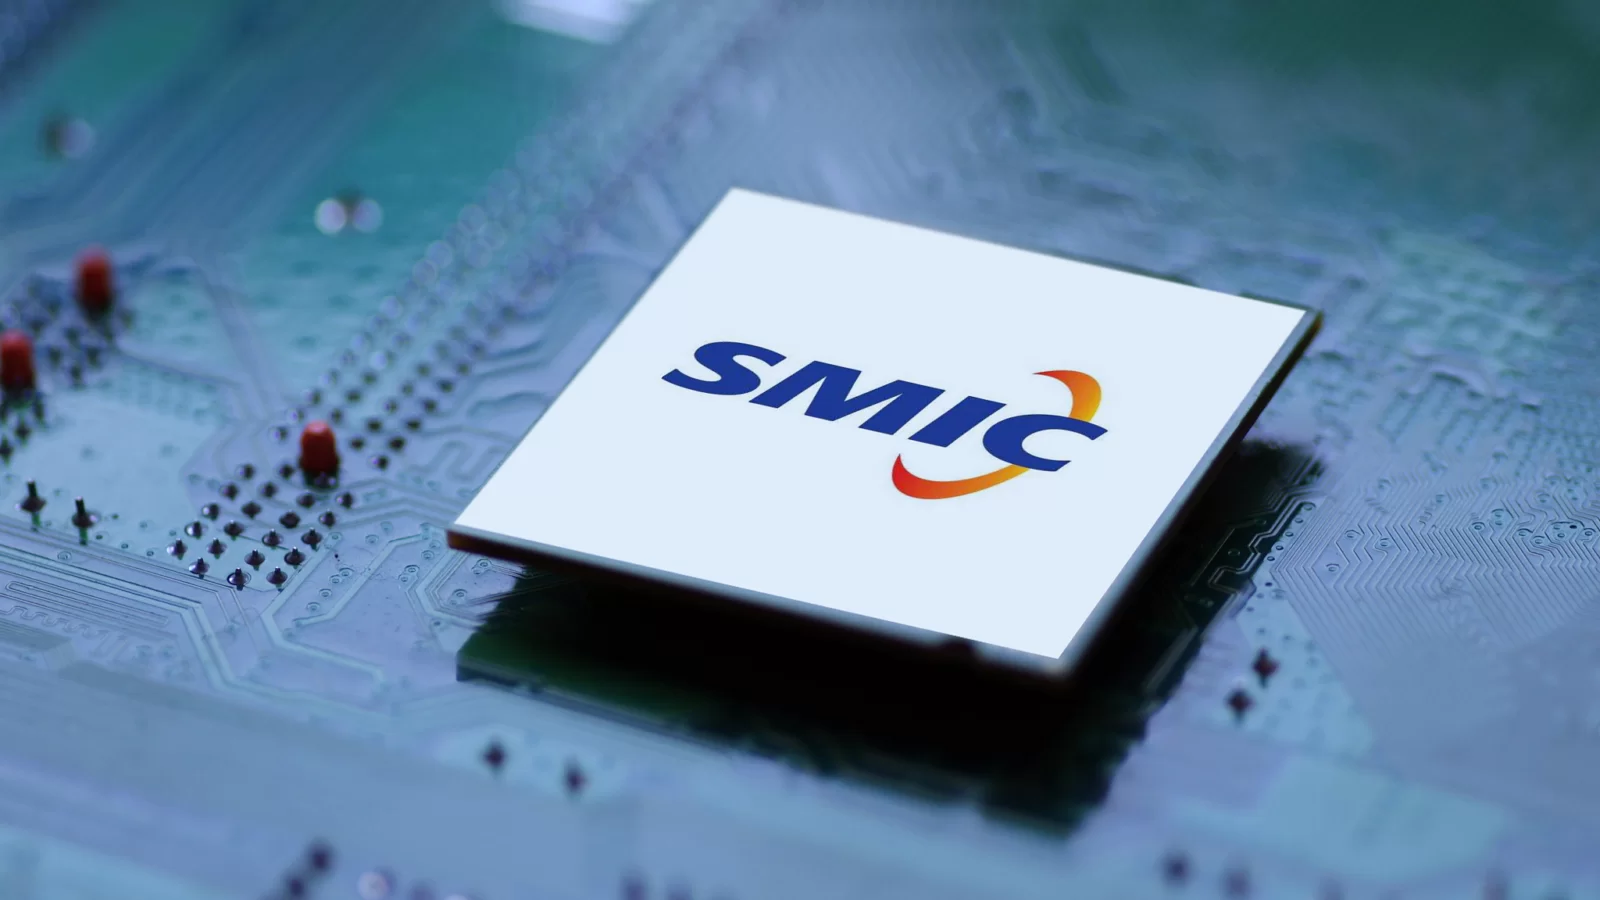 smic | smic | สหรัฐอเมริกาเล็งแบน SMIC ผู้ผลิตชิปสัญชาติจีนด้วย